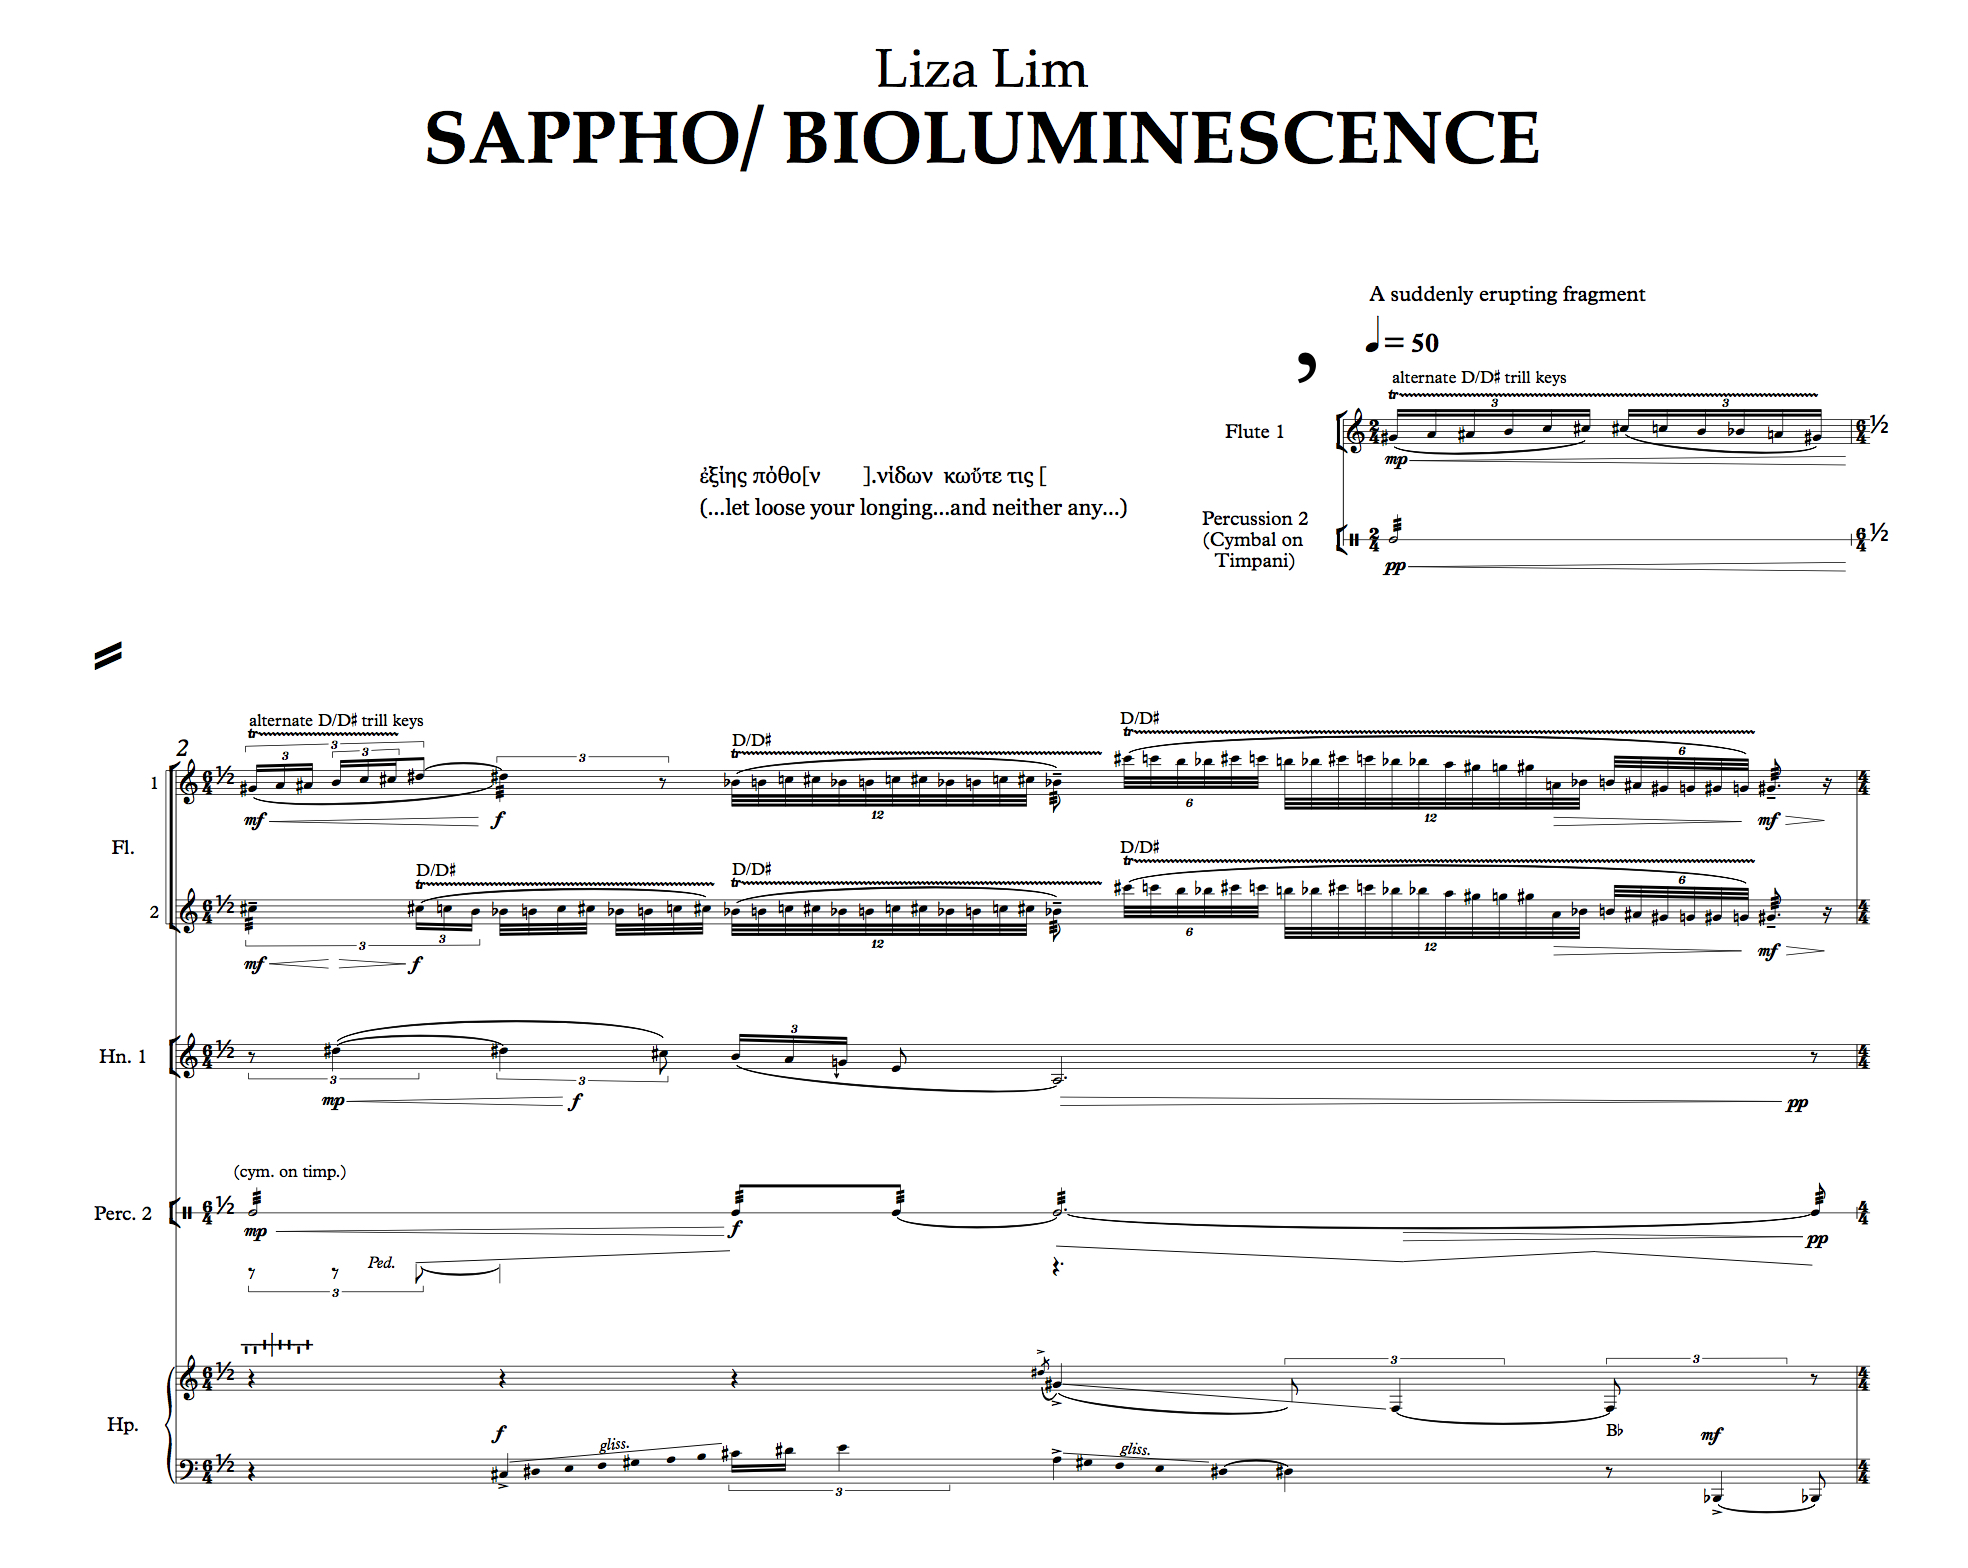 Sappho: Bioluminescence excerpt